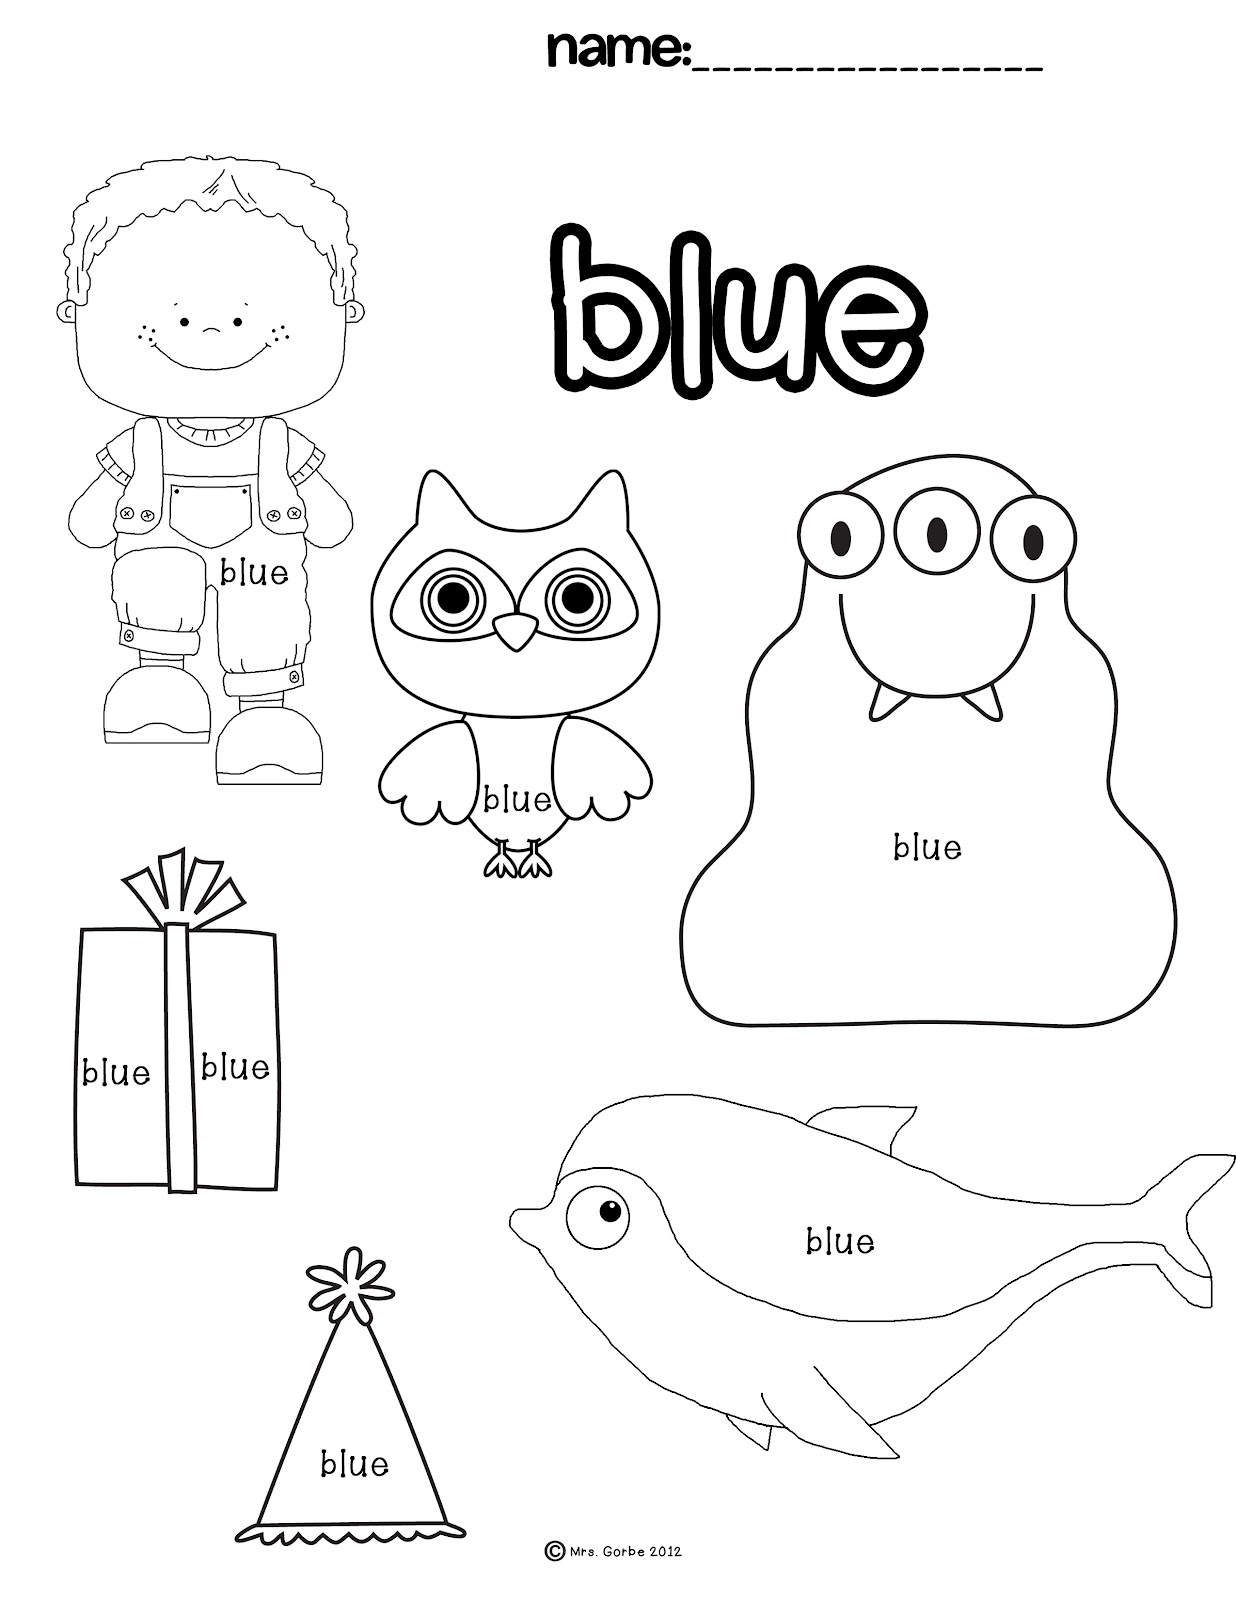 color-blue-worksheets-preschool-sketch-coloring-page